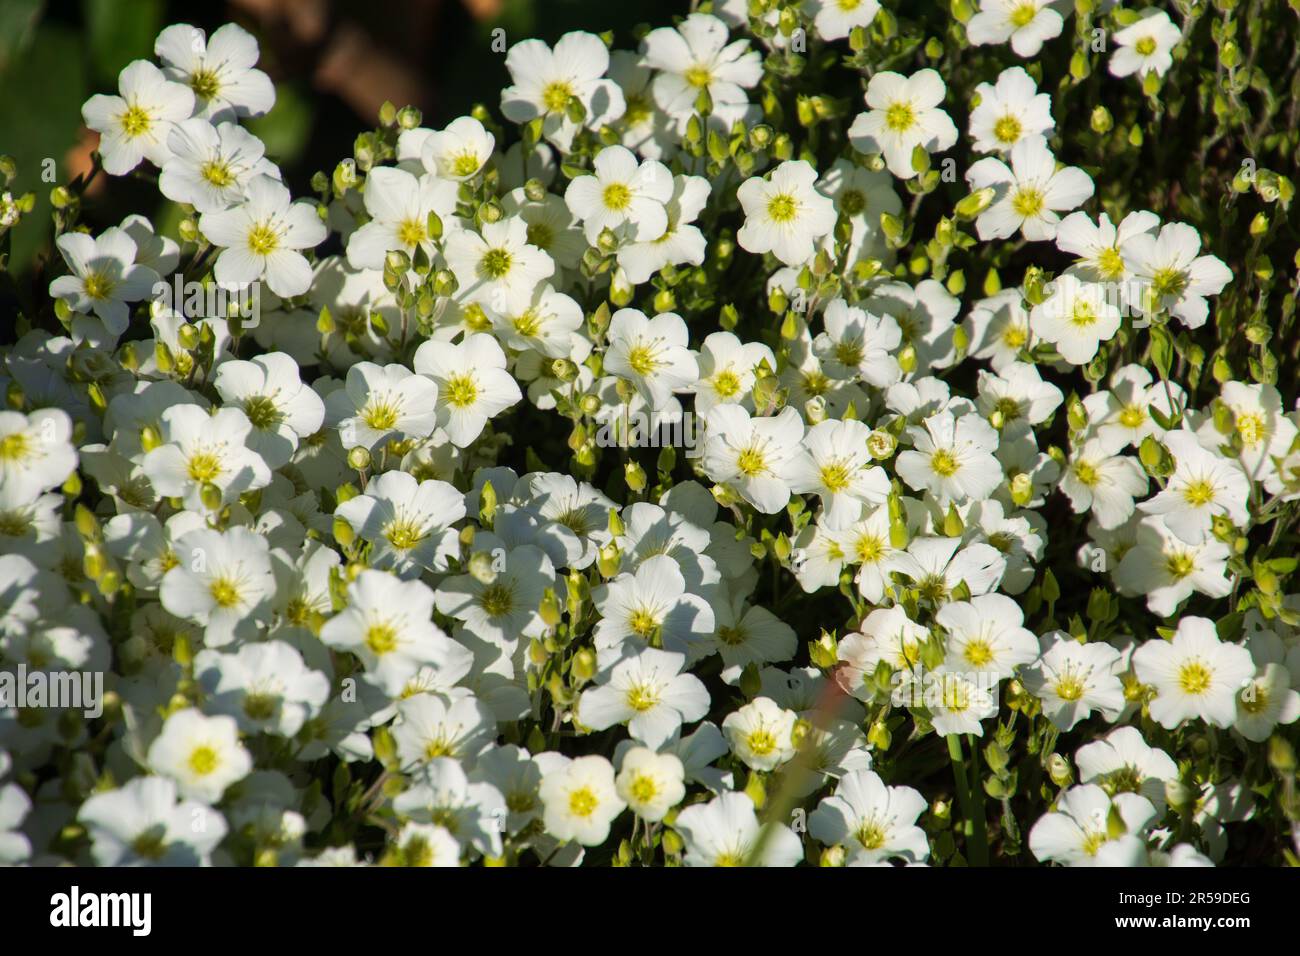 Summer Flowering Bright white Sunrose or Helianthemum grow in the garden area Stock Photo